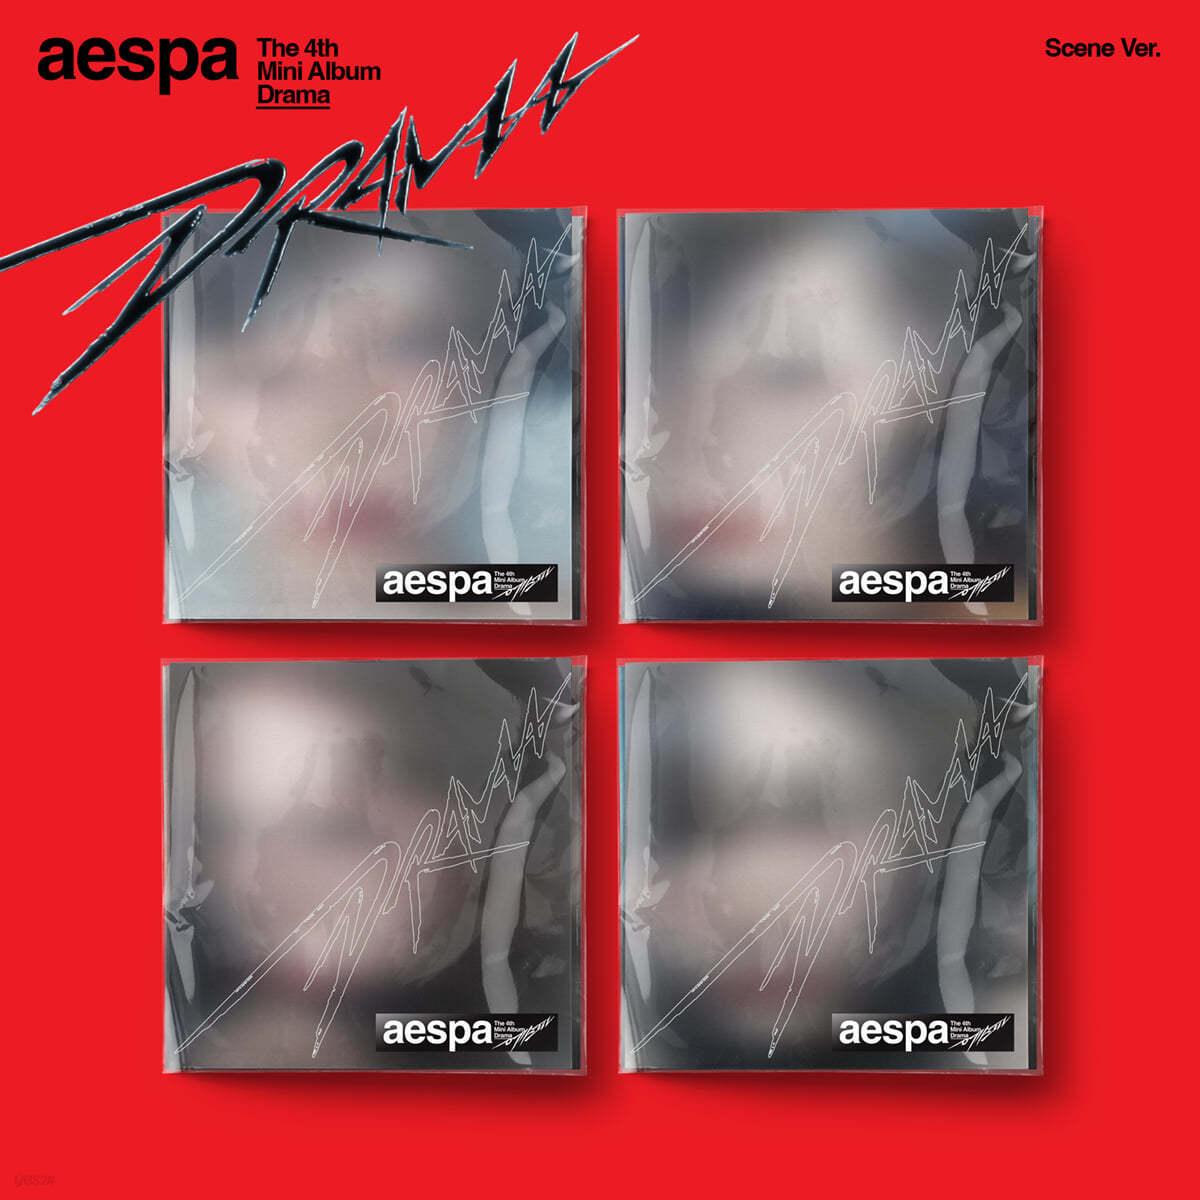 AESPA 4th Mini Album 'Drama' (Scene Ver.) - KKANG